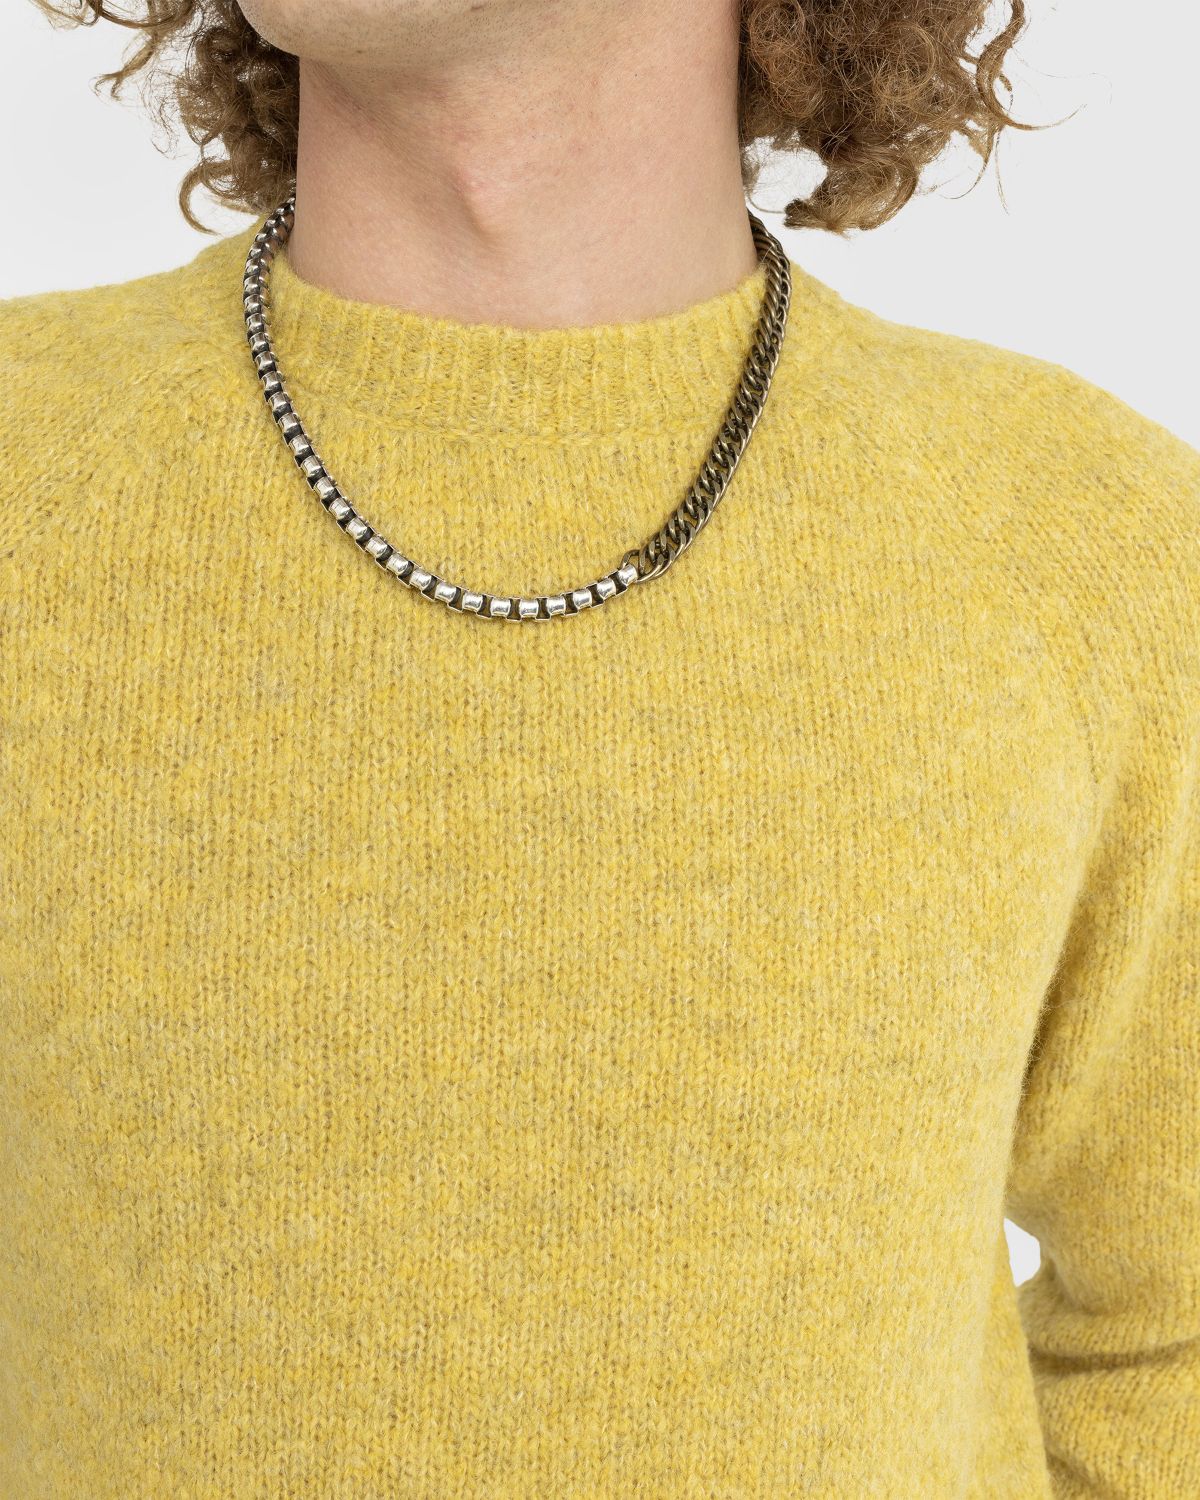 Dries van Noten – M232-206 Necklace Black - Jewelry - Silver - Image 4